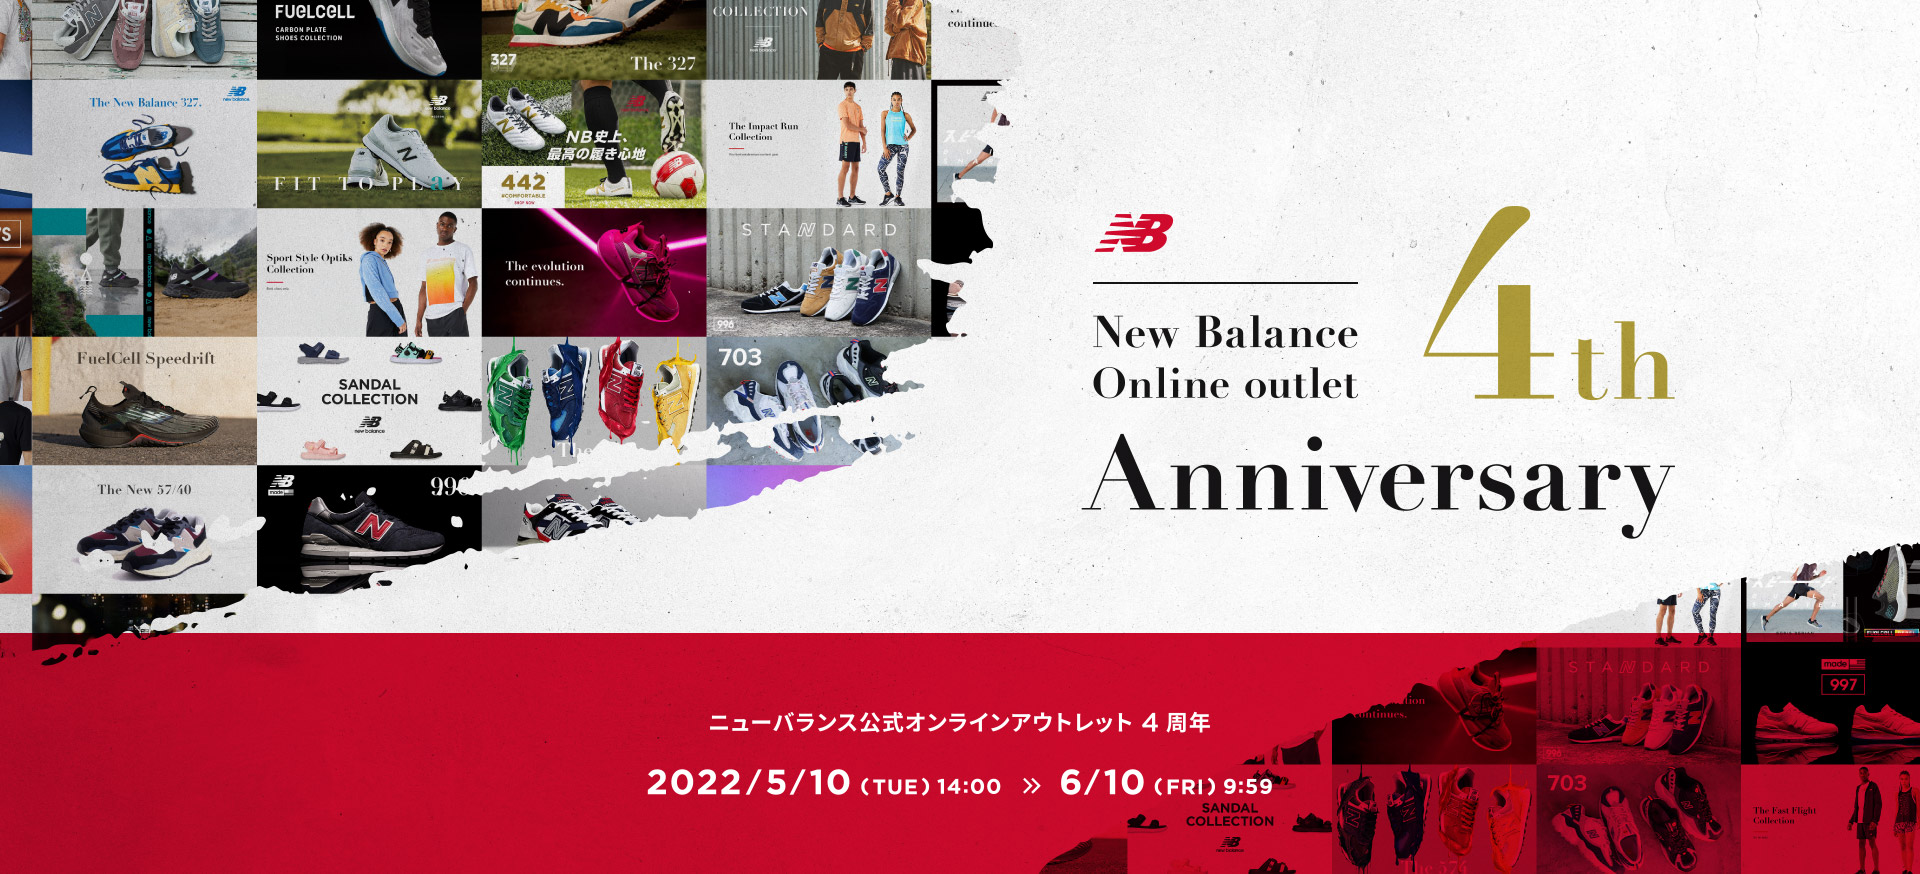 New Balance Online outlet 4th Anniversary. ニューバランス公式オンラインアウトレット4周年 2022年5月10日(火)14:00から6月10日(金)9:59まで